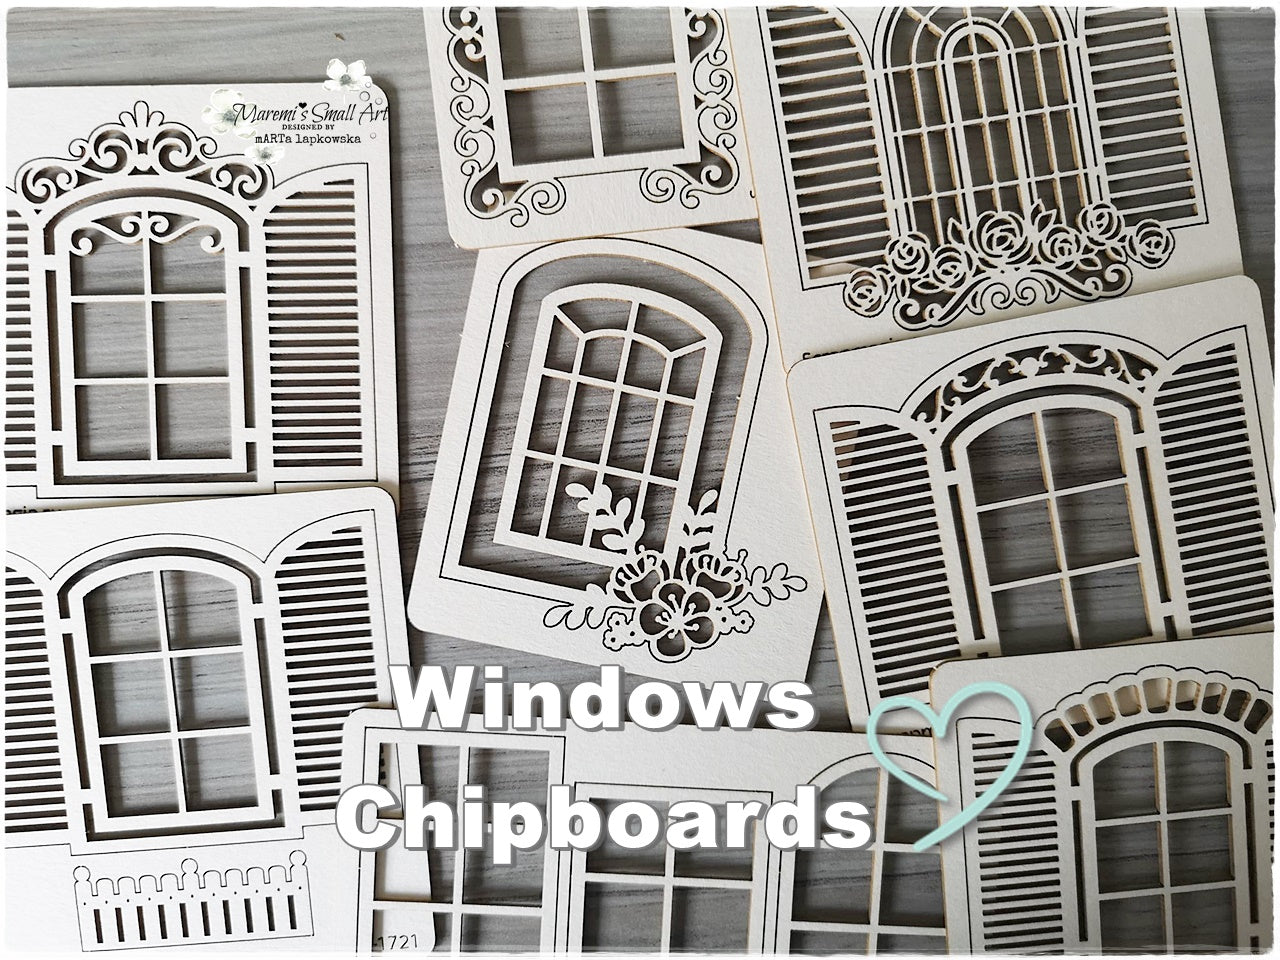 3 Pieces of beautiful random Windows Chipboard Set